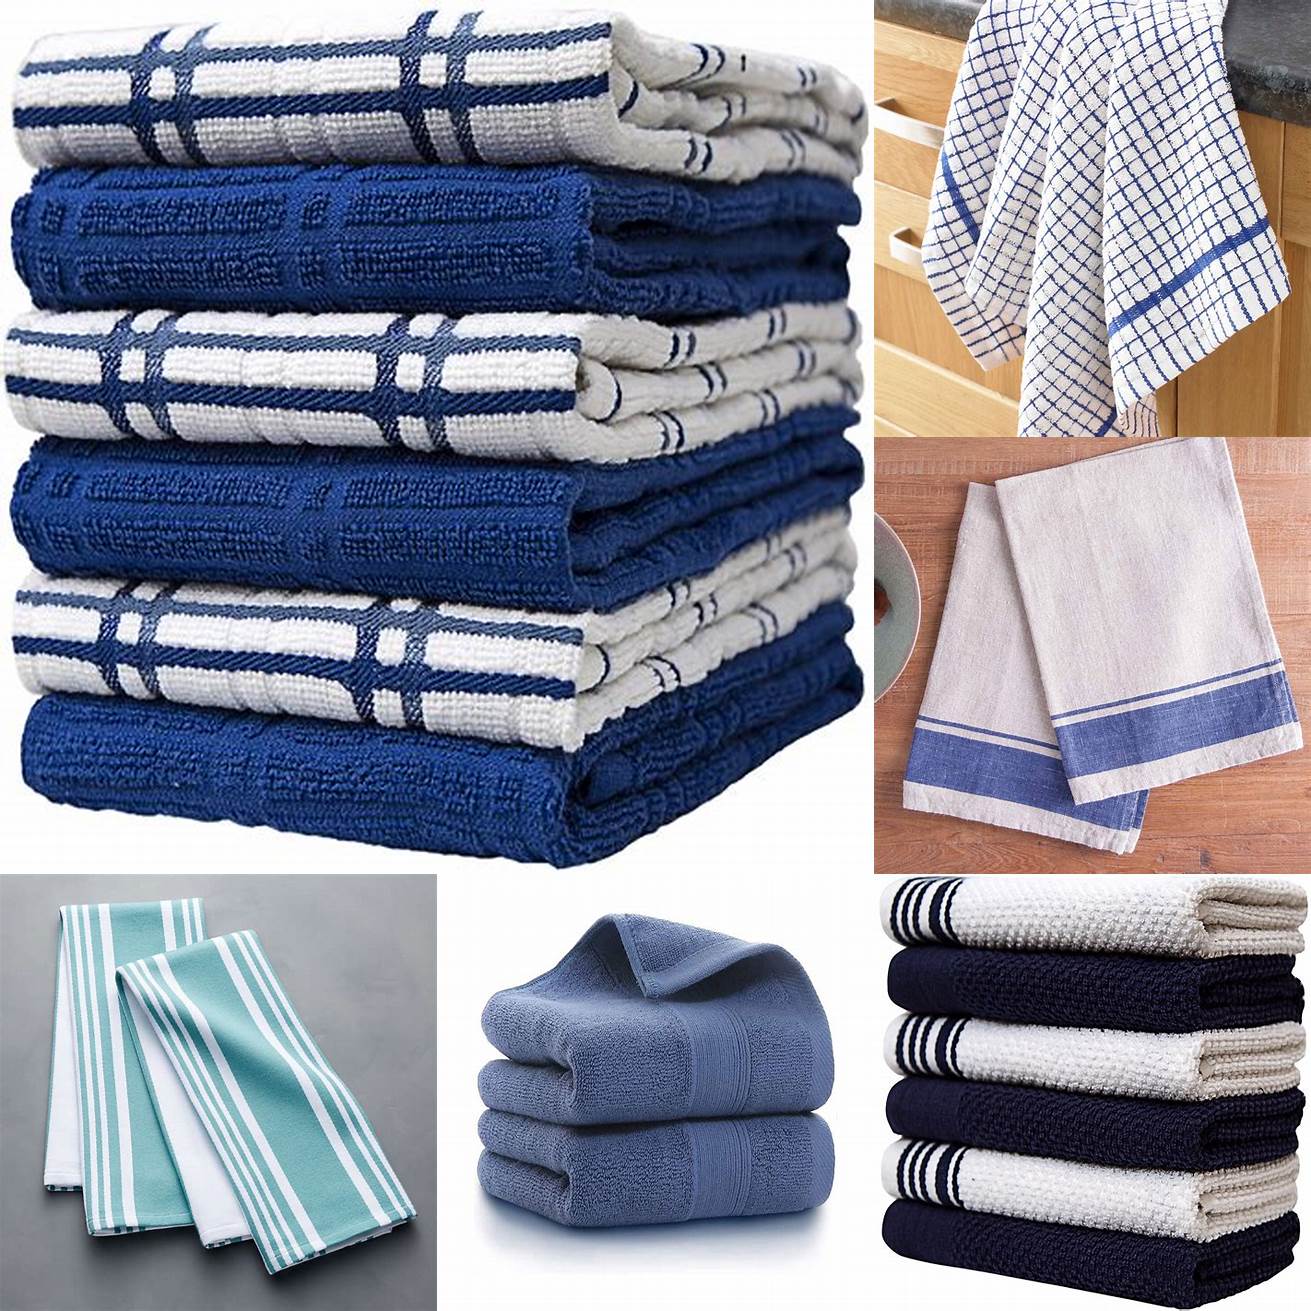 Blue kitchen towels